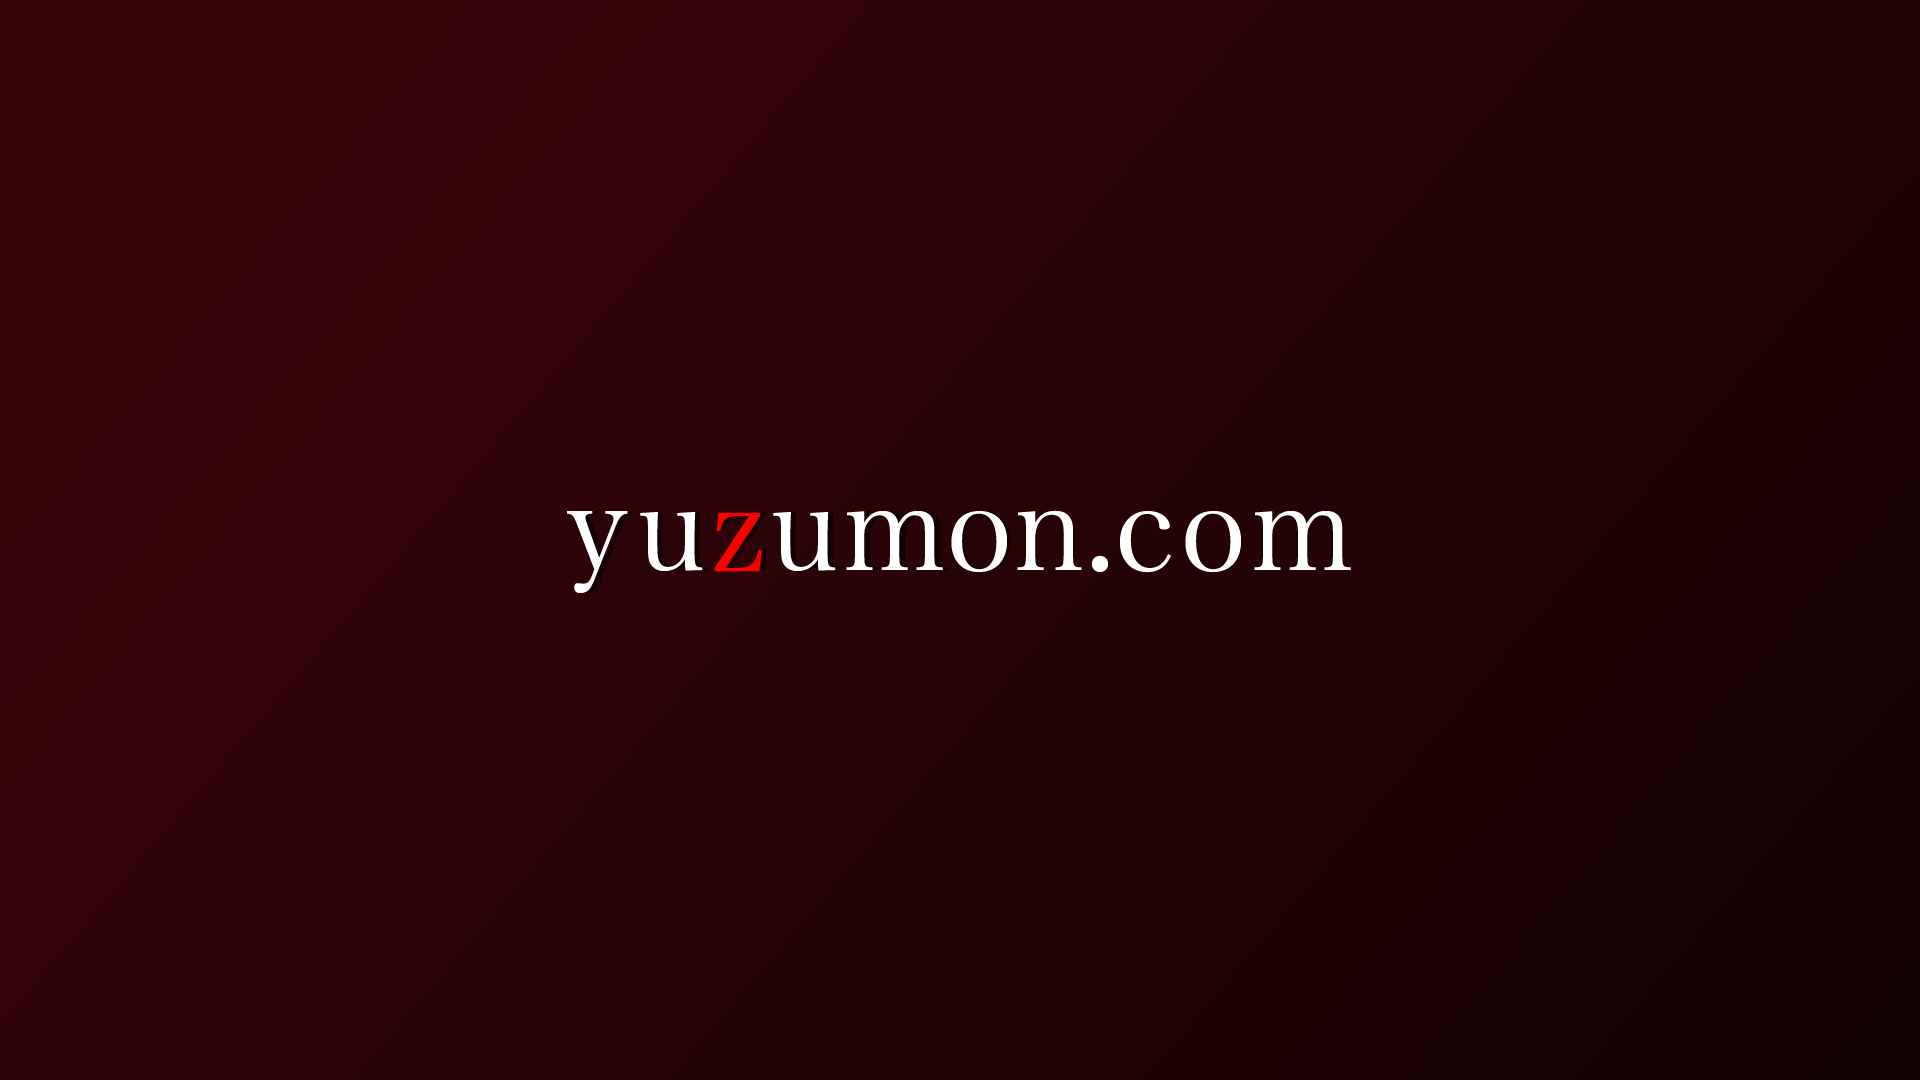 YUZUMON様のオフィシャルLPサイト